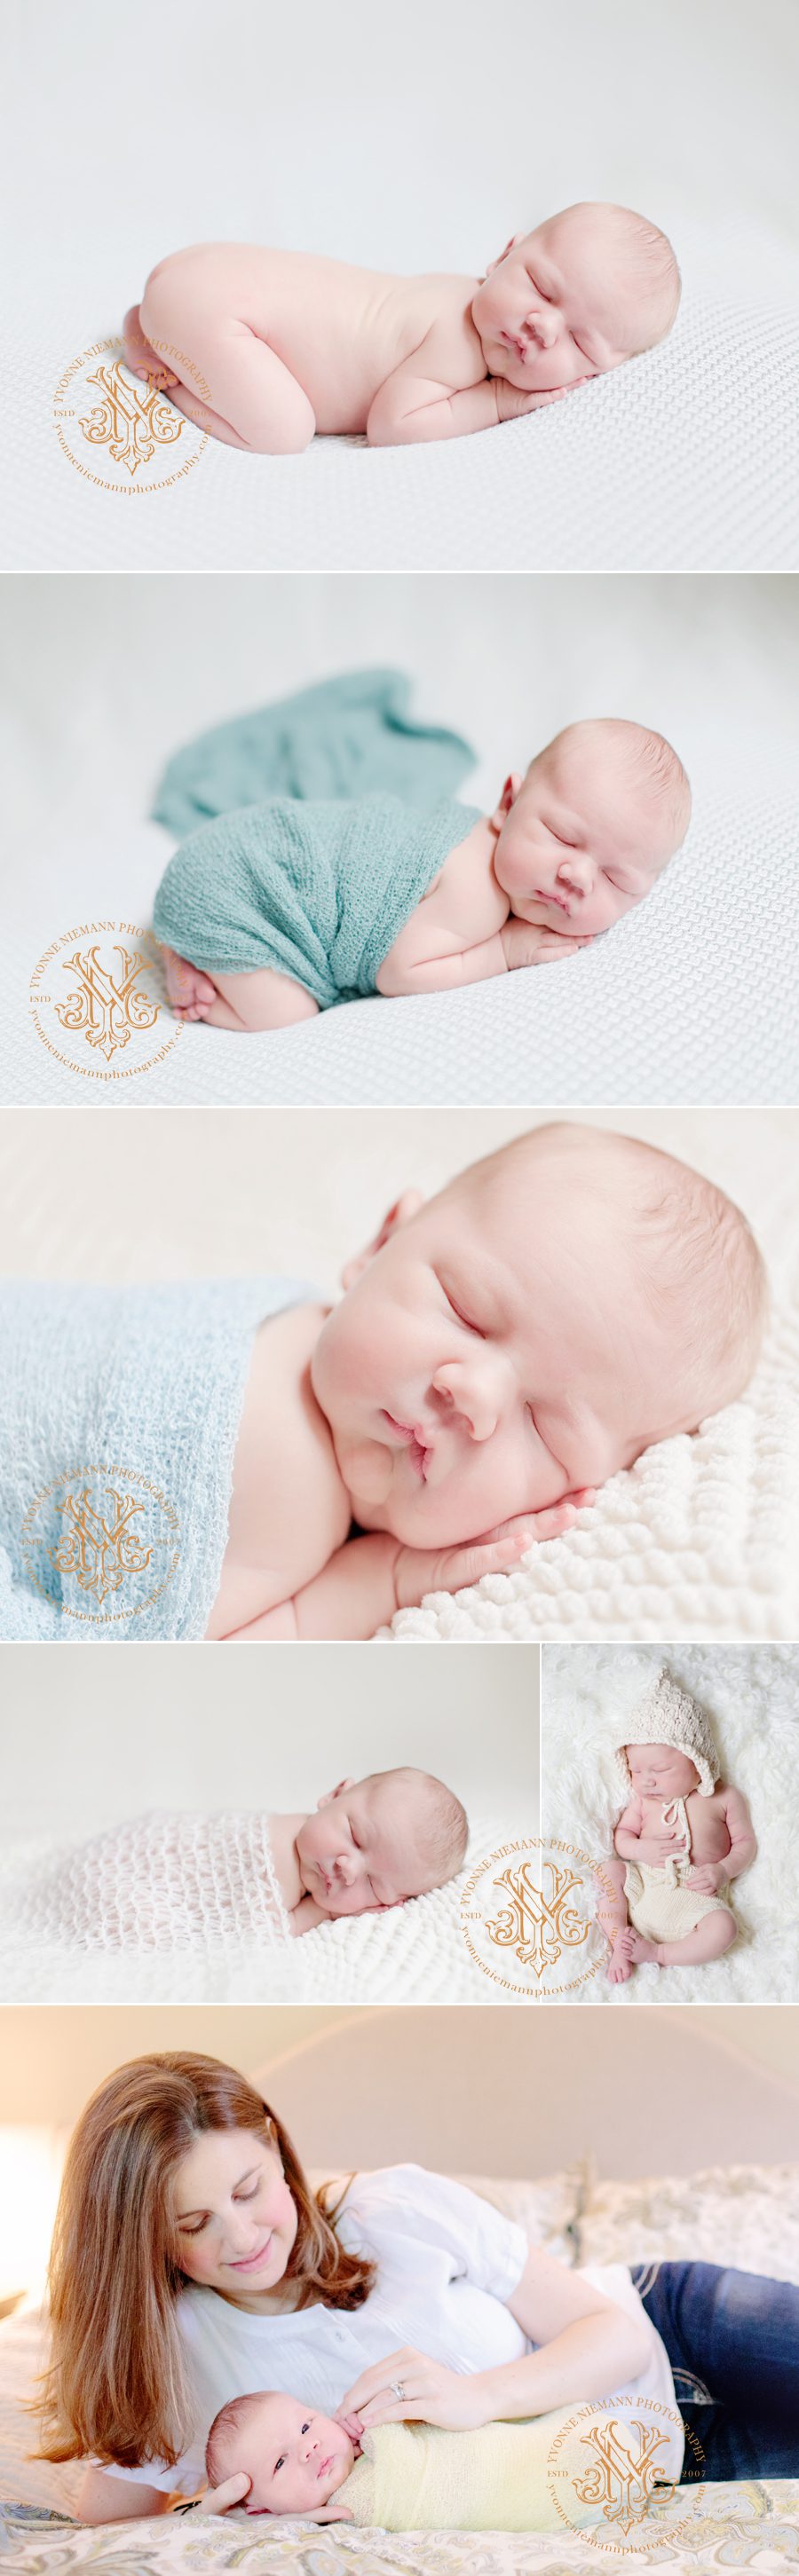 Newborn portraits taken on location in St. Louis by Yvonne Niemann Photography.